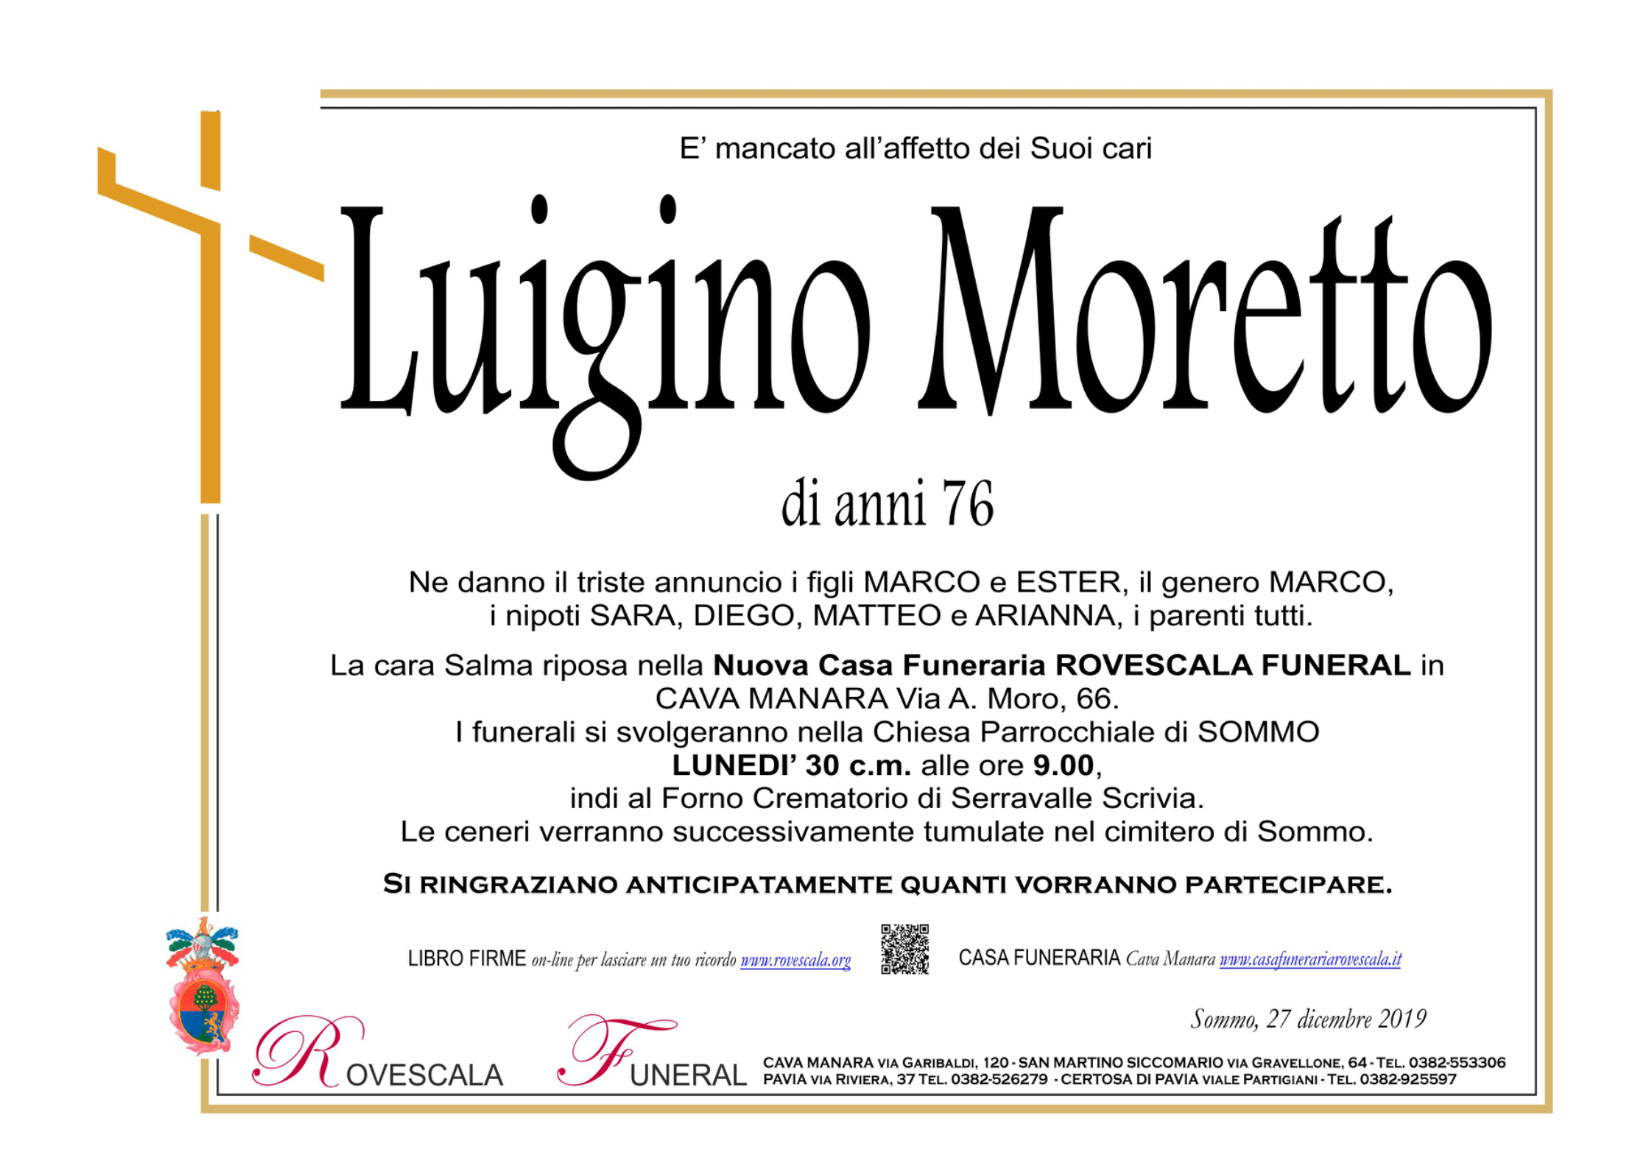 Luigino Moretto